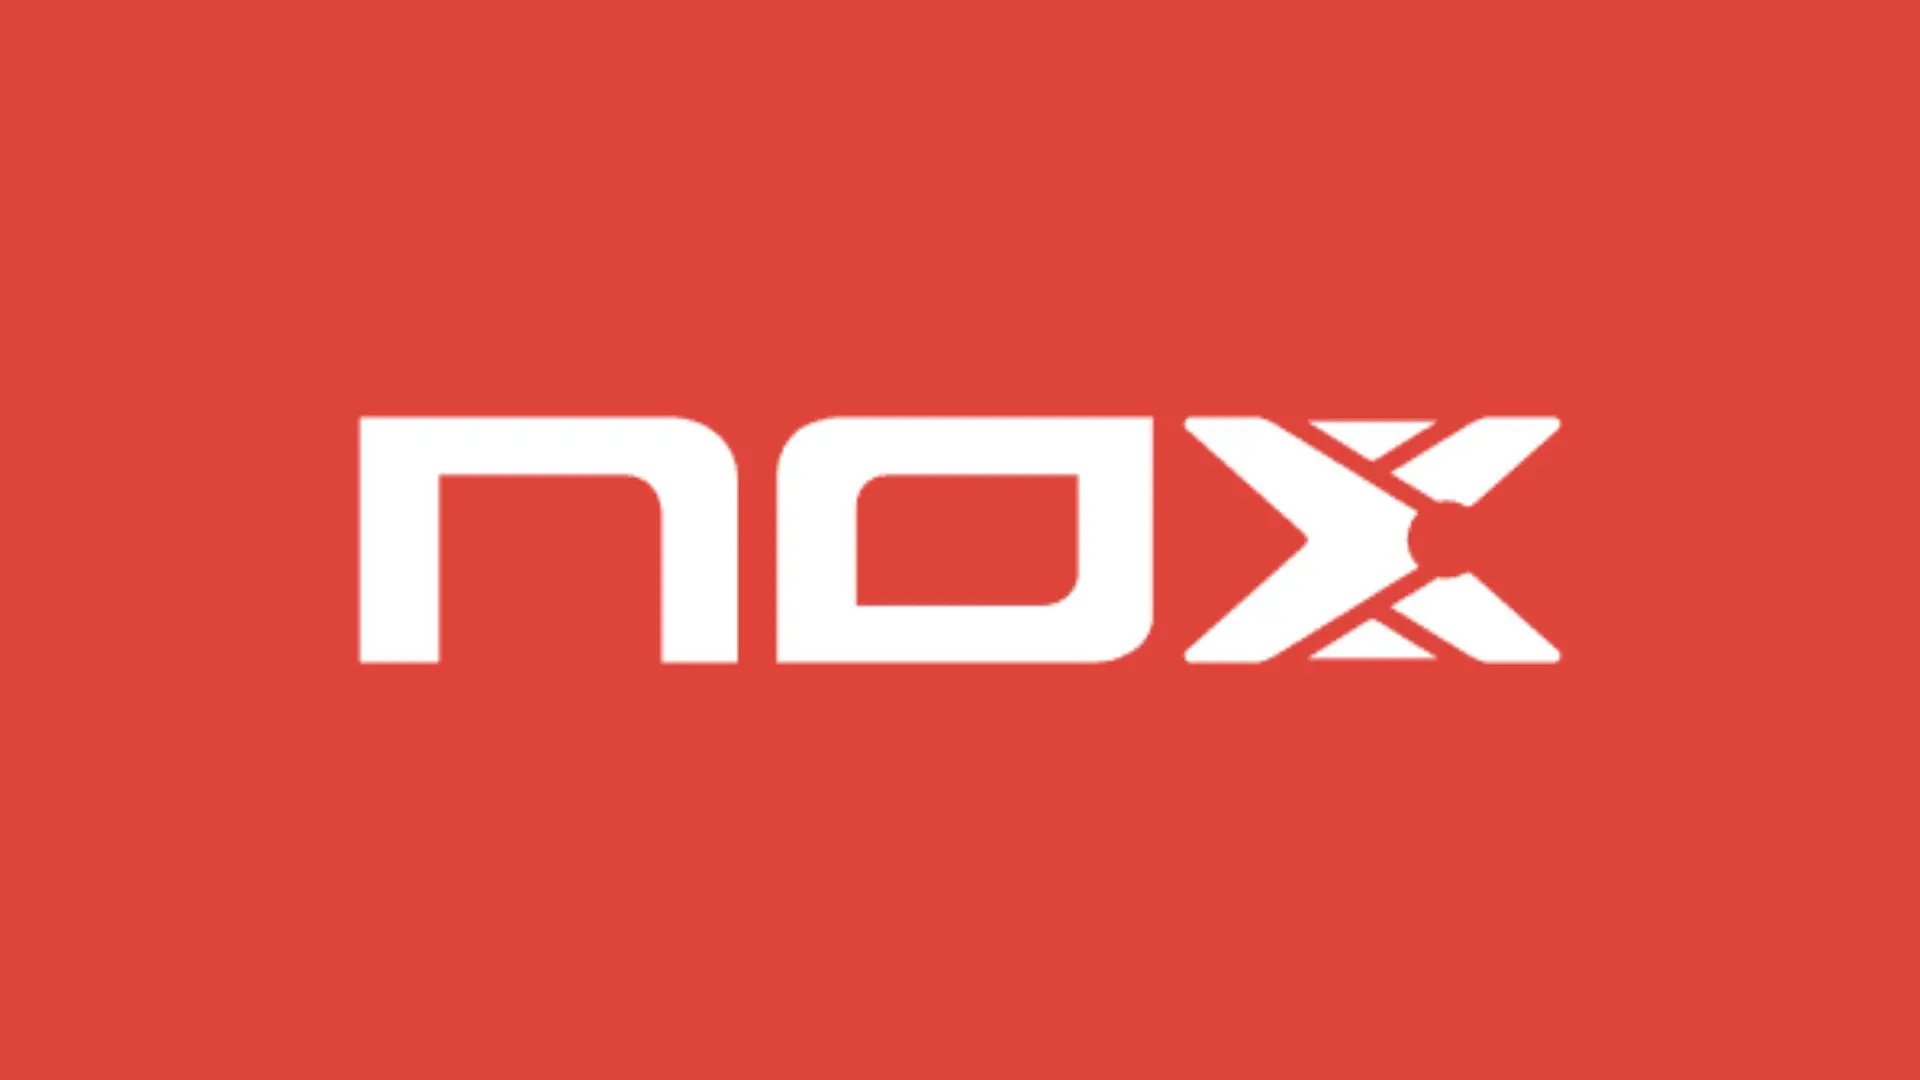 Nox padel : quale pala utilizzare a seconda della temperatura?